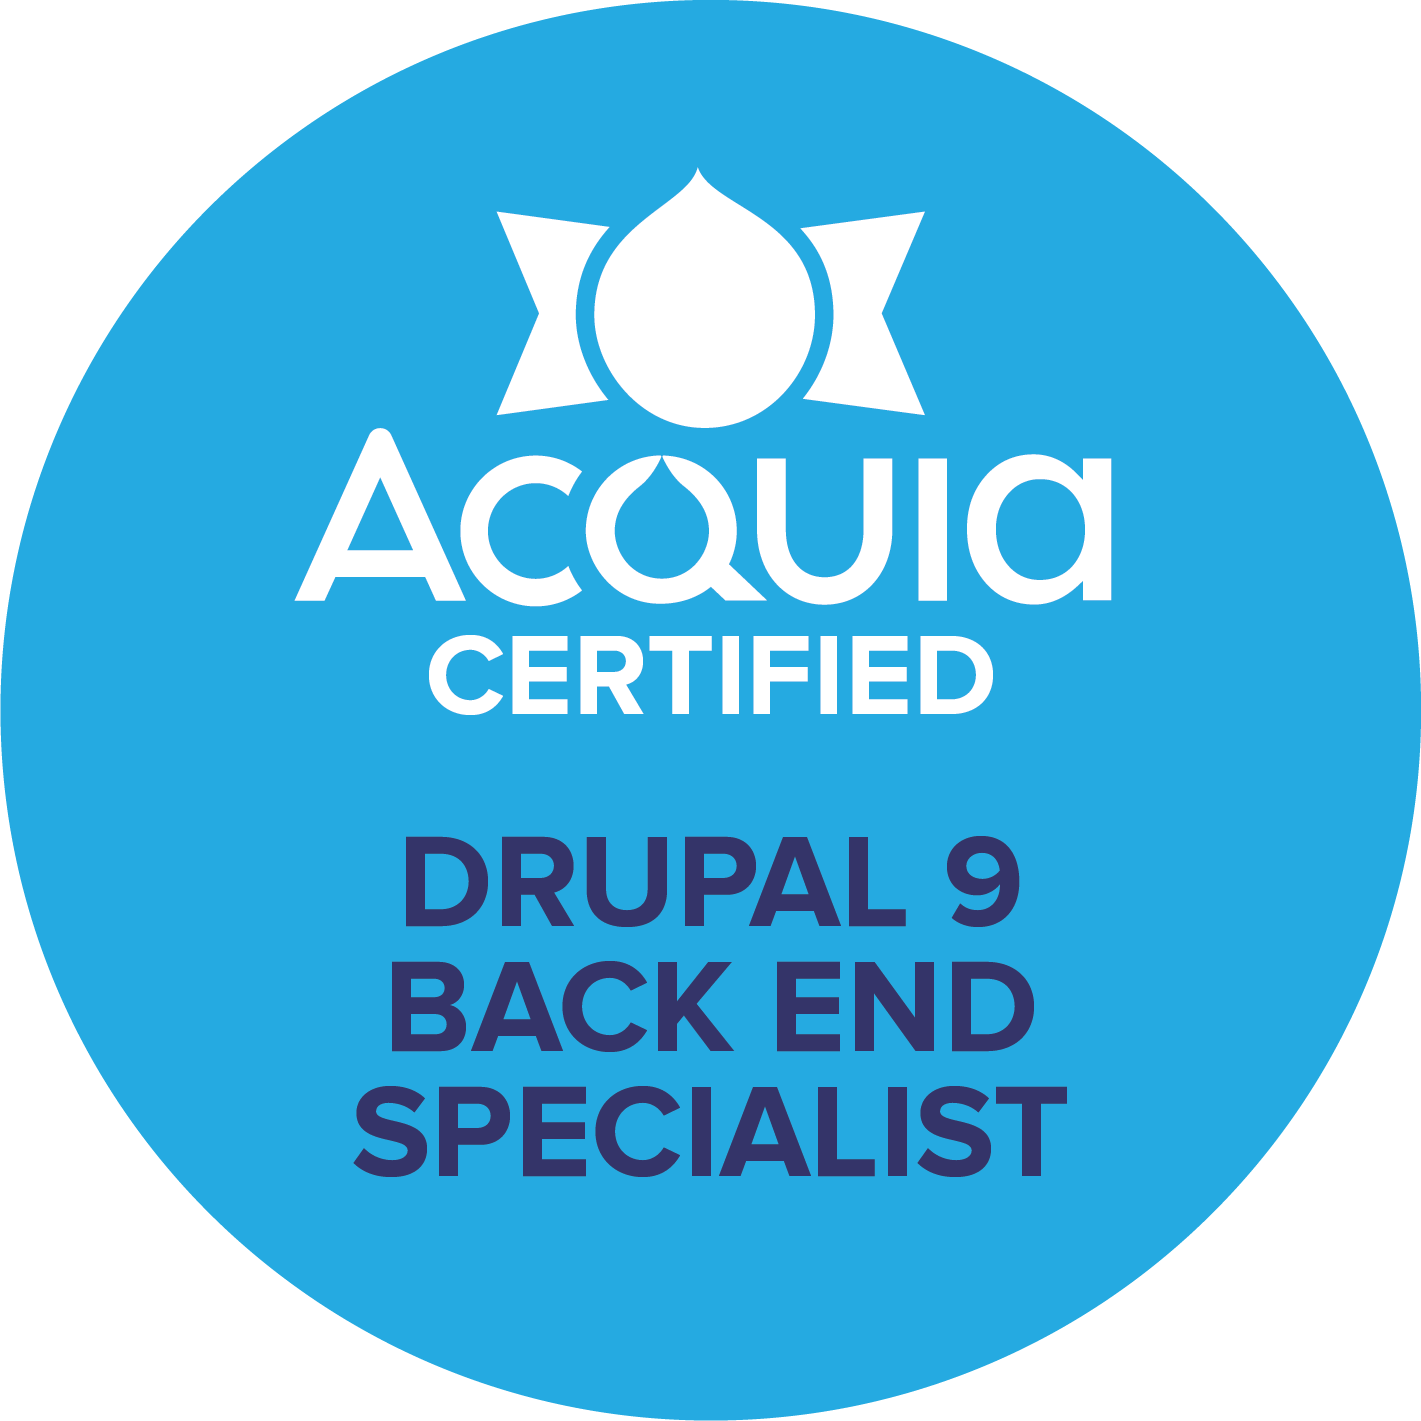 Acquia certified drupal 9 back end specialist